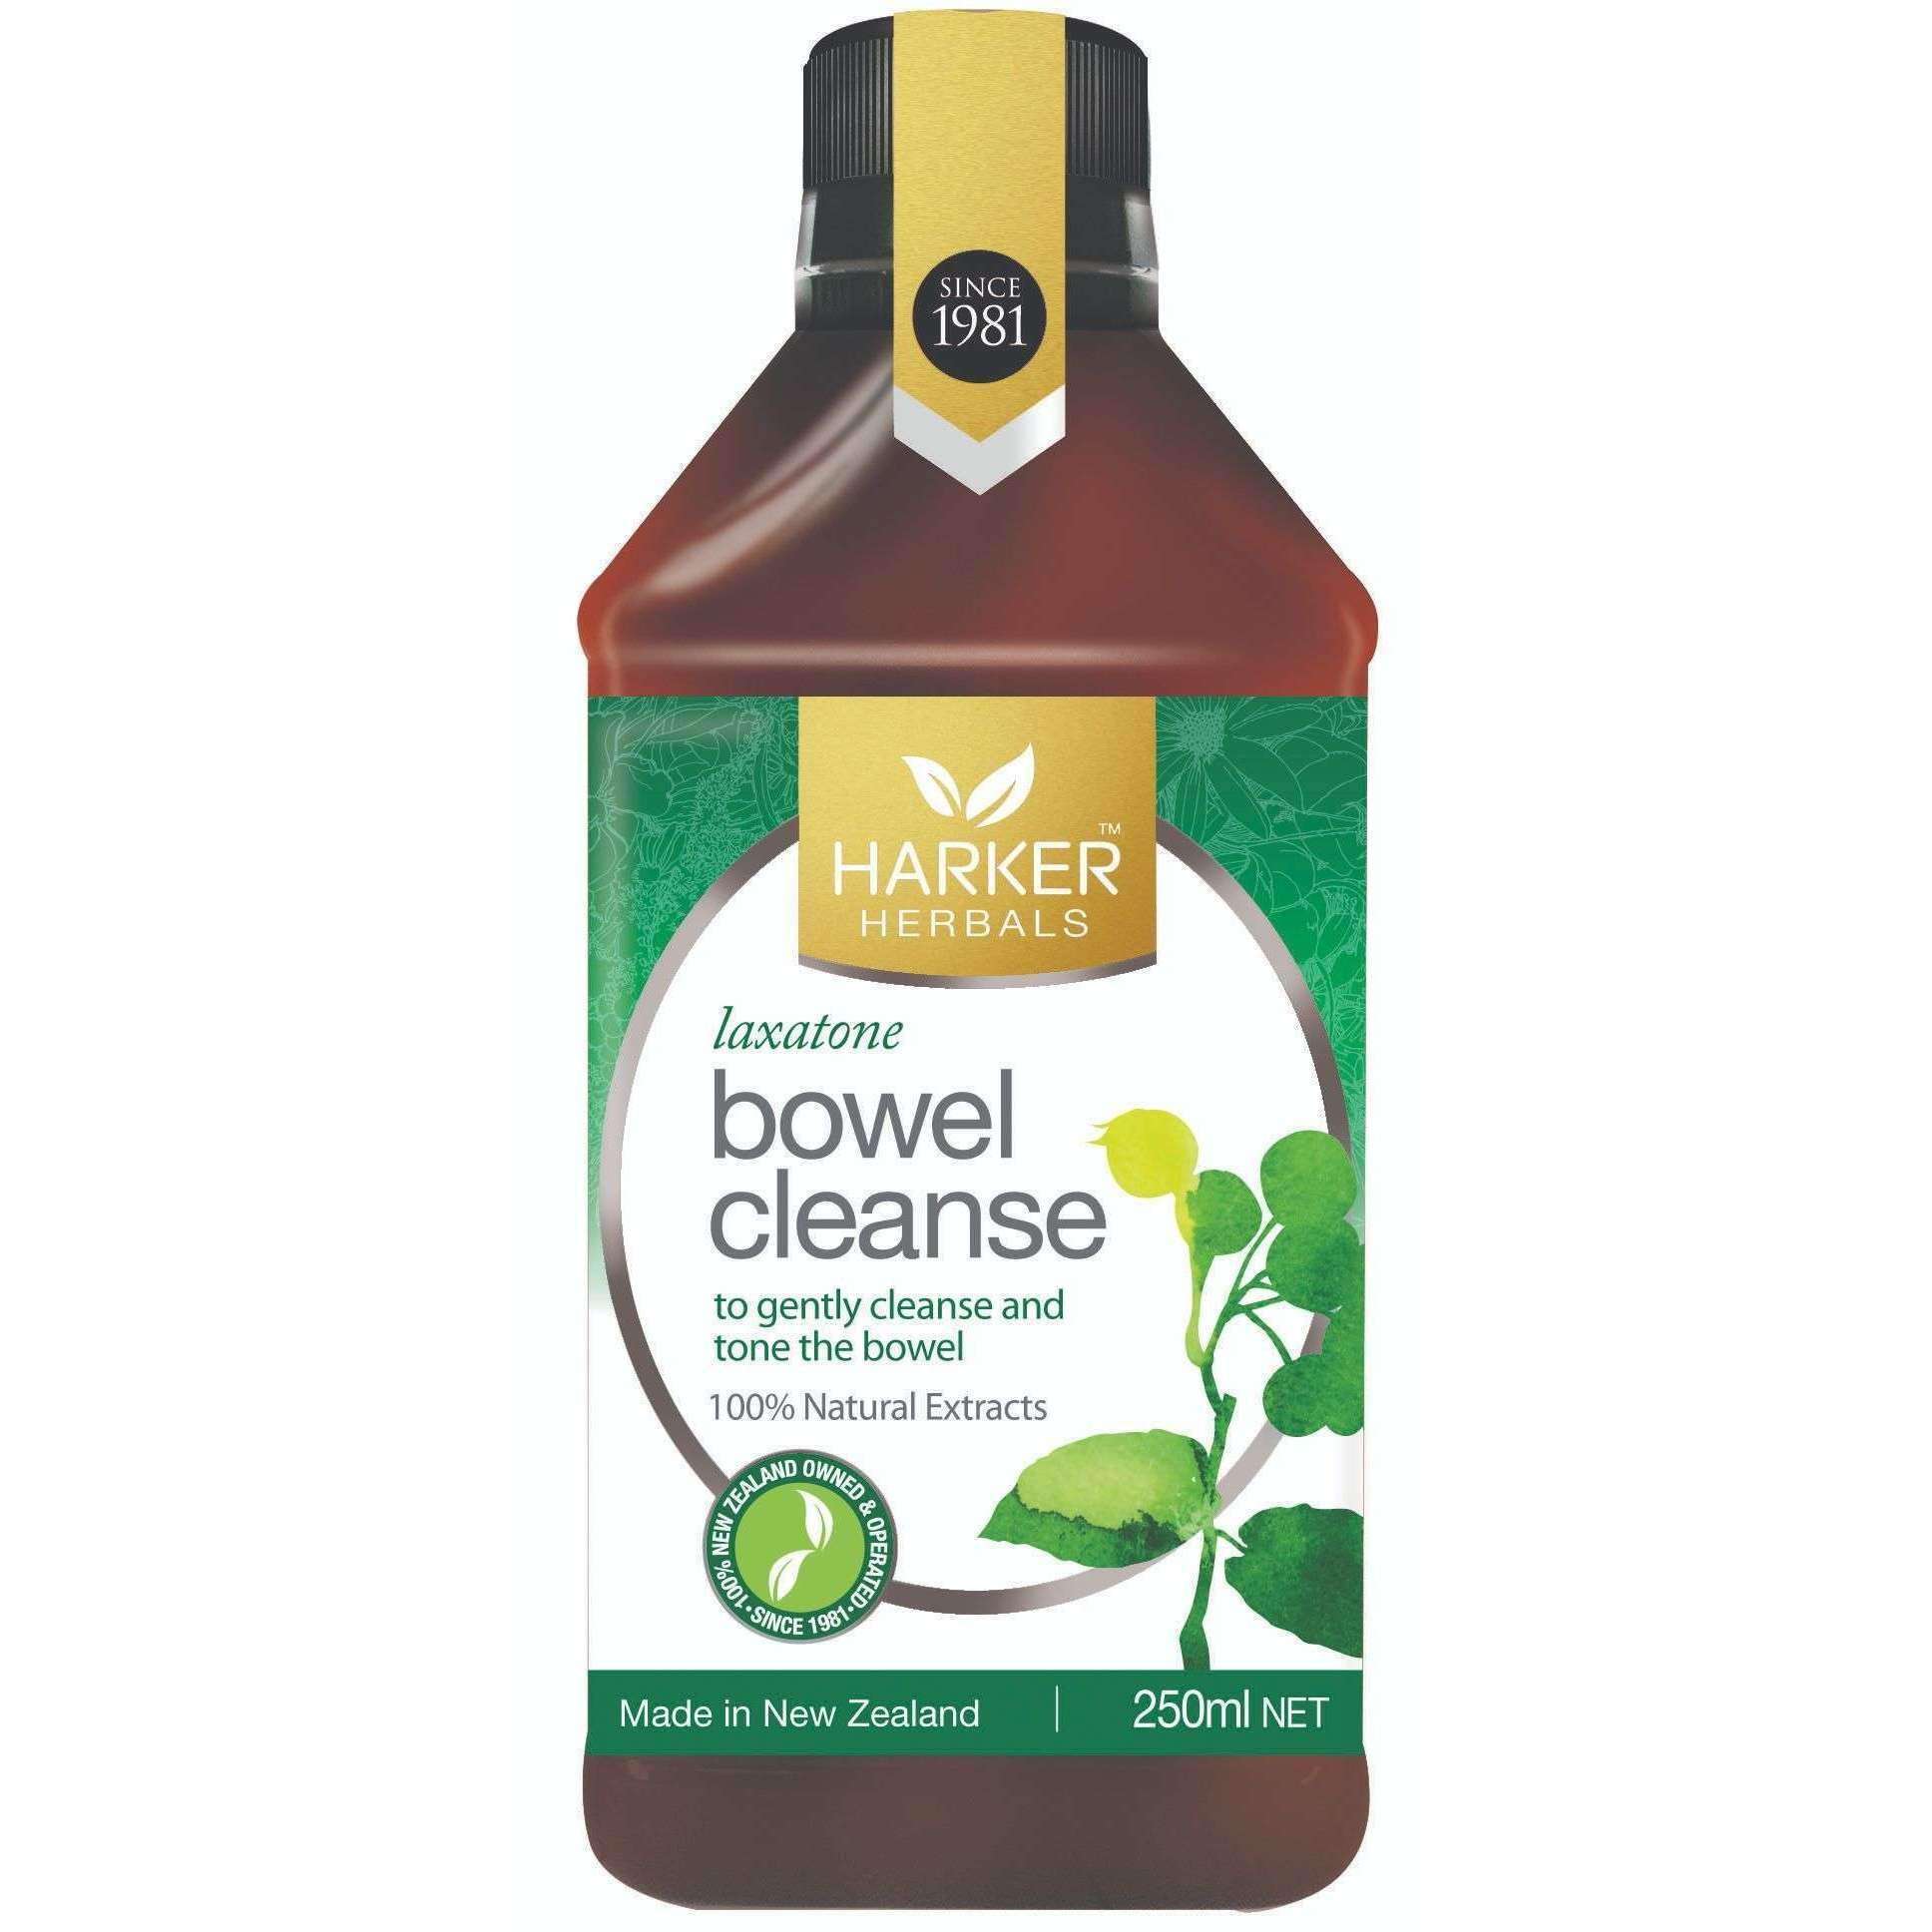 Harker Herbals Bowel Cleanse